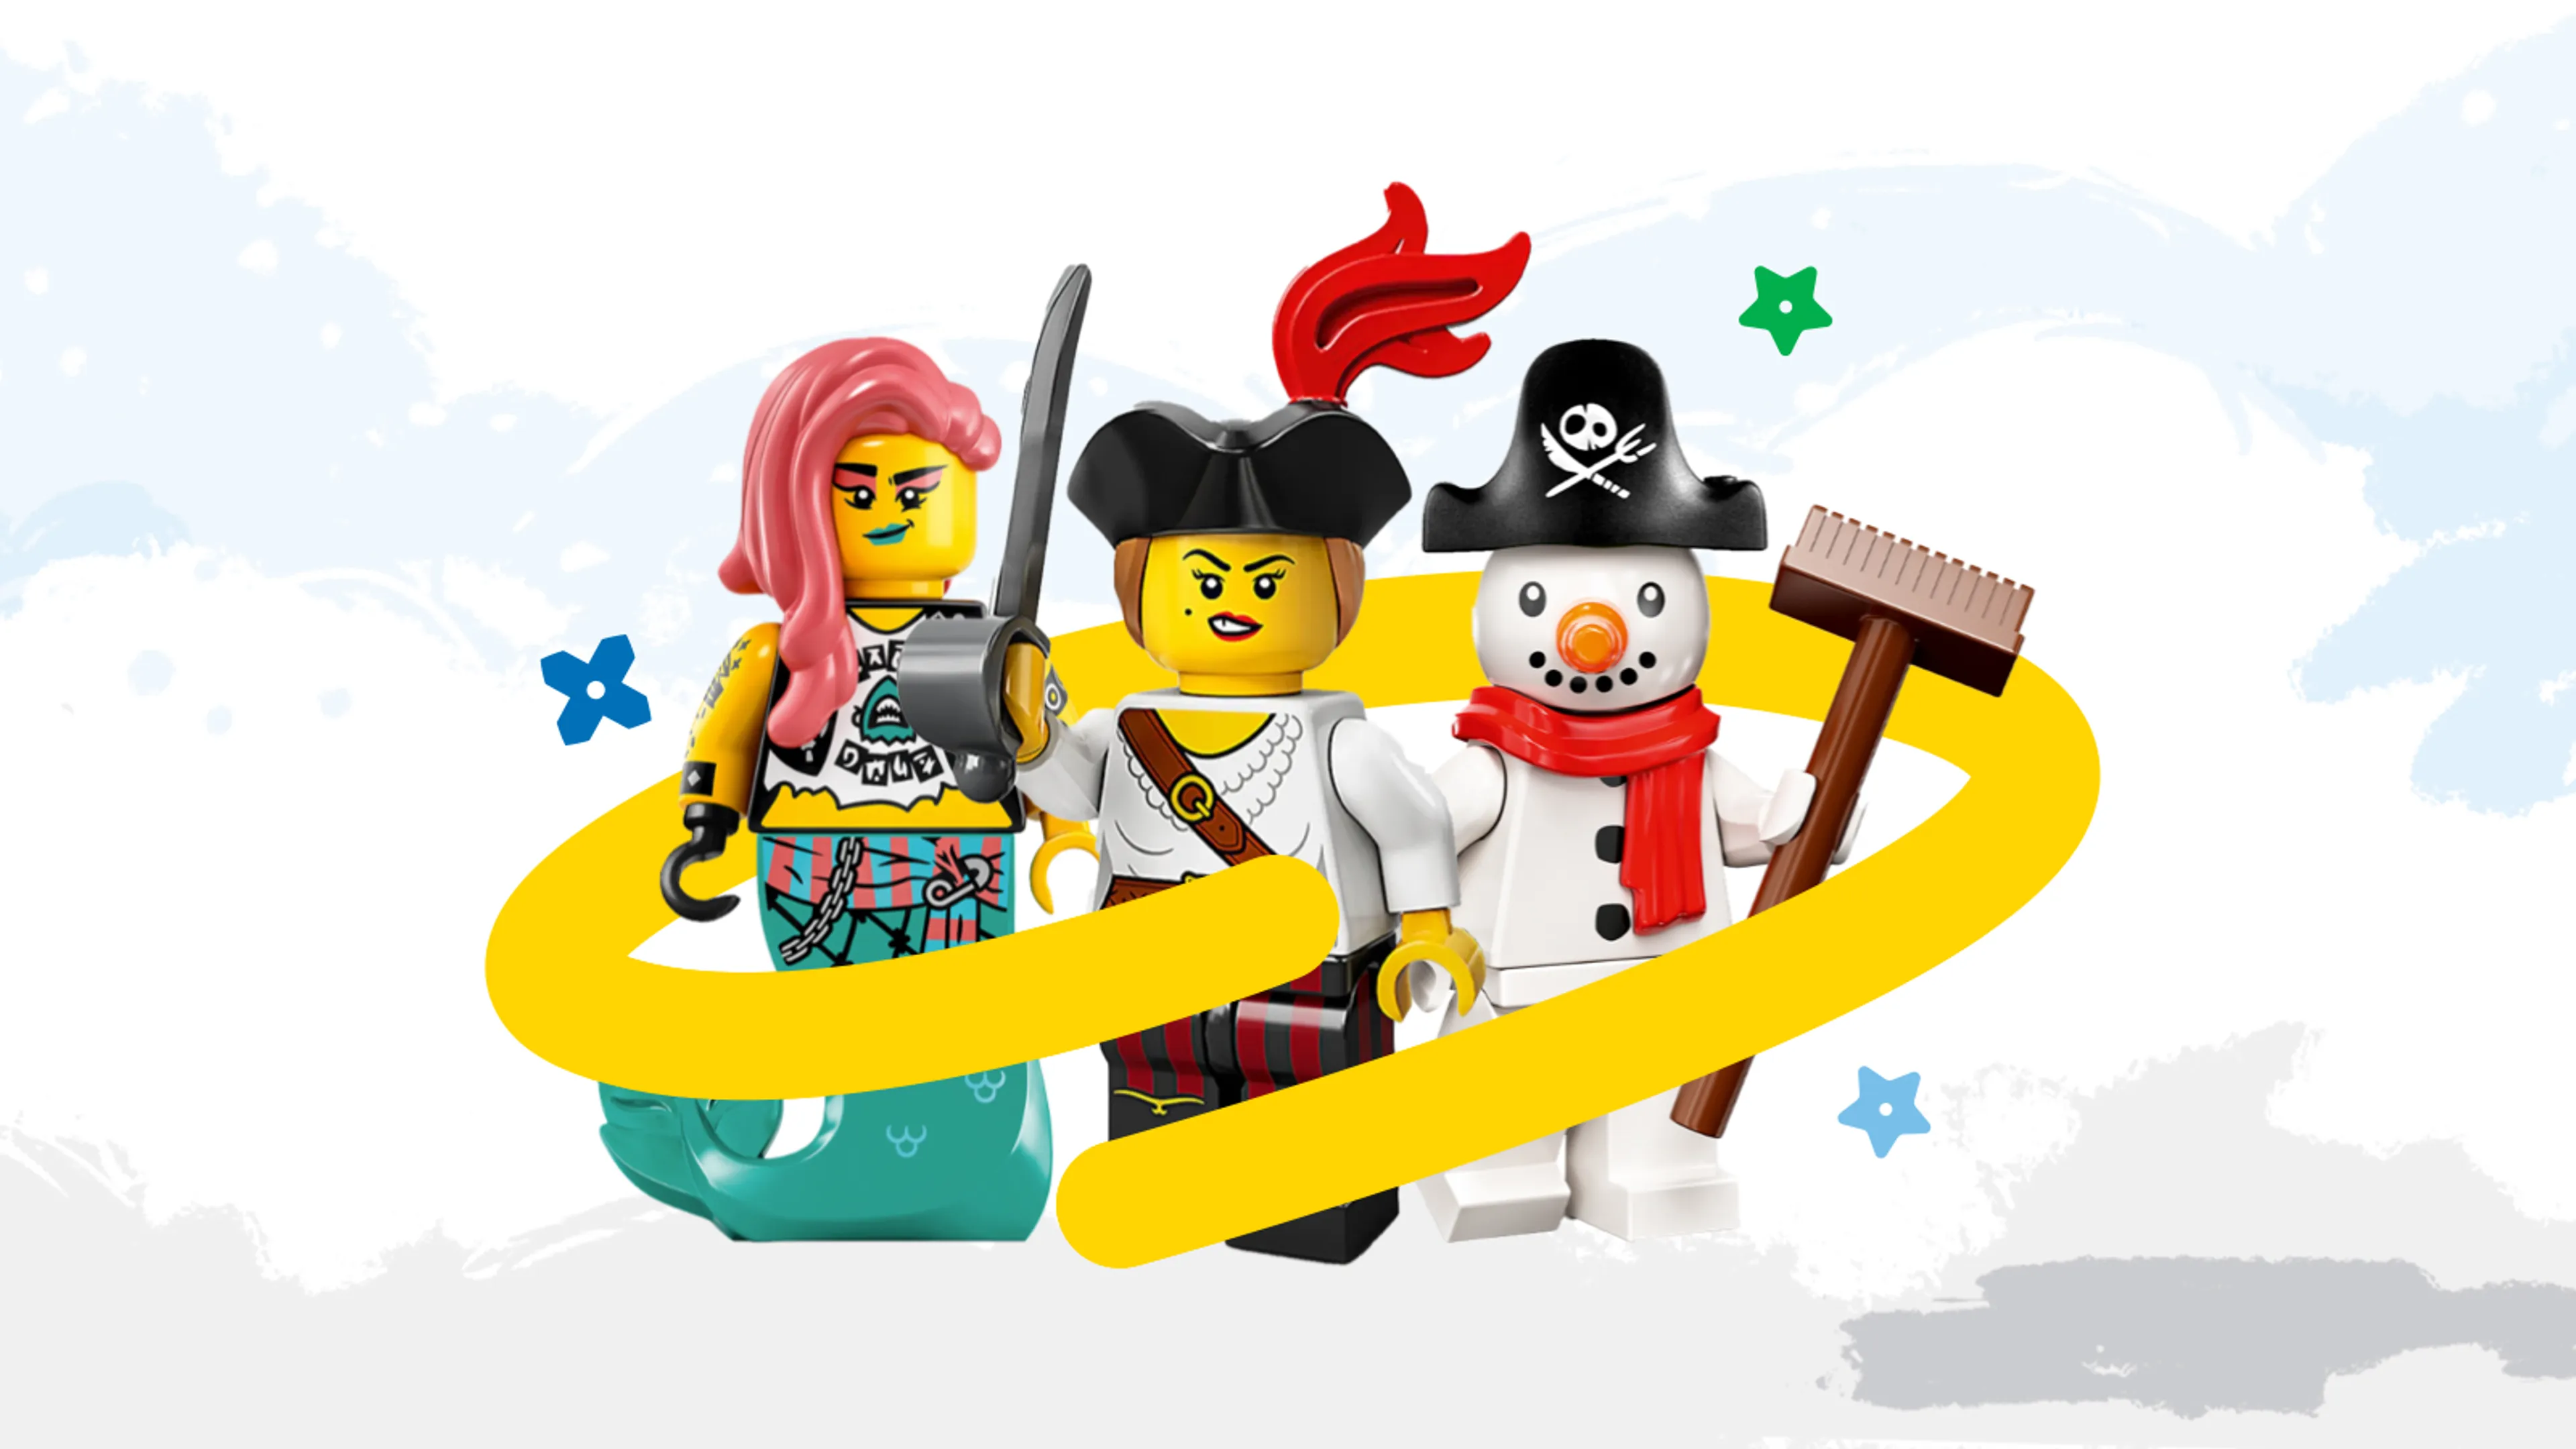 A pirate, a mermaid and a snowman minifigure